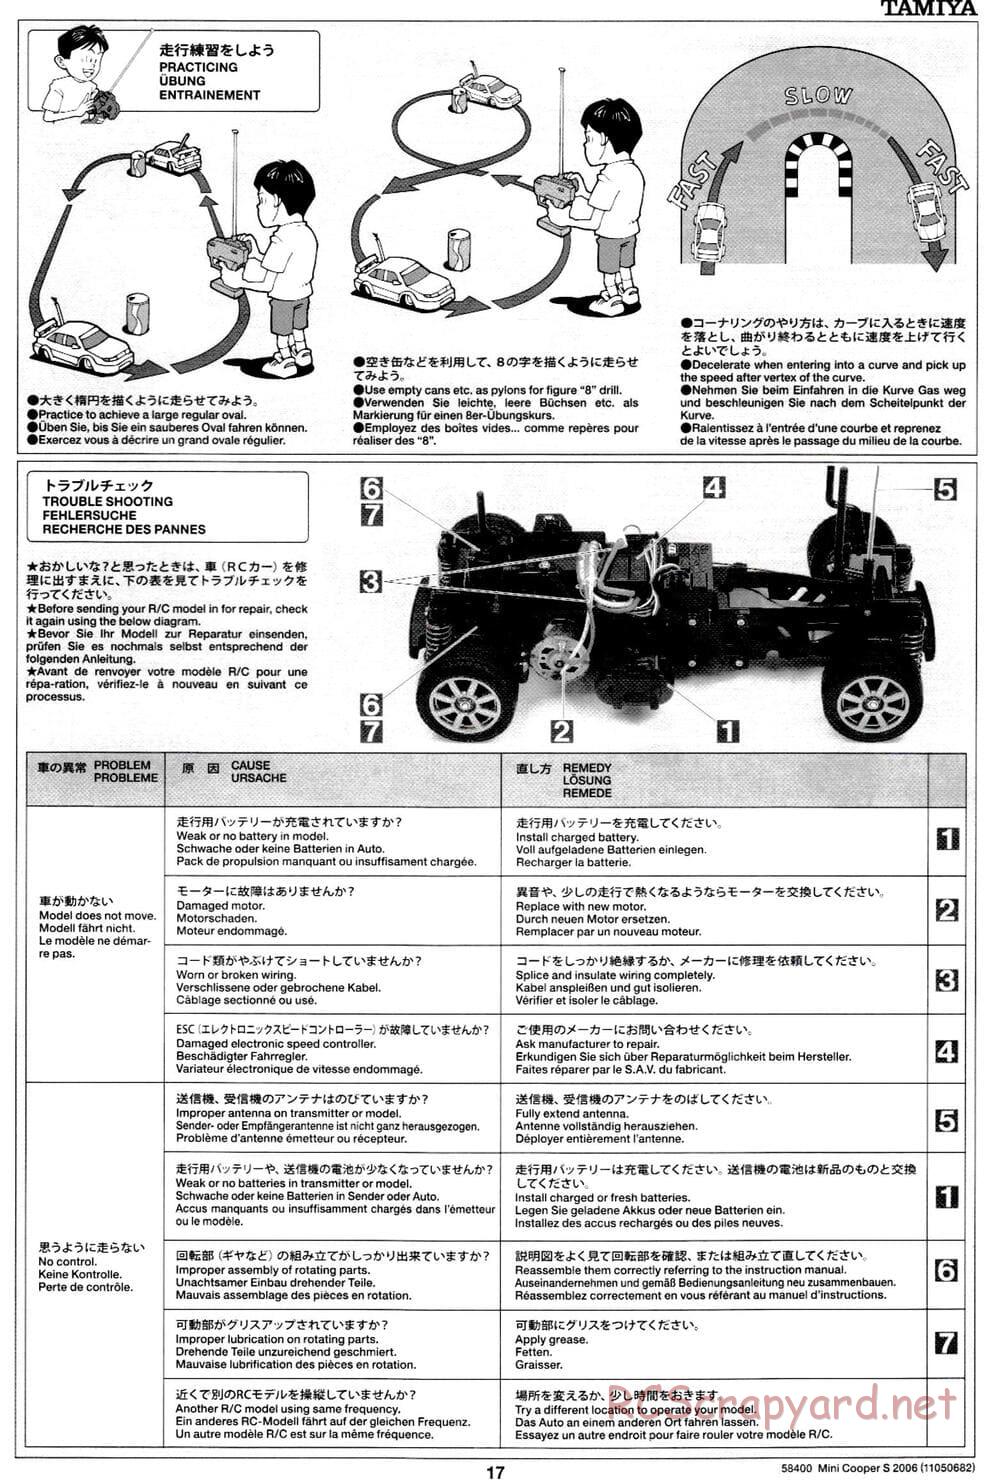 Tamiya - Mini Cooper S 2006 - M03L Chassis - Manual - Page 17